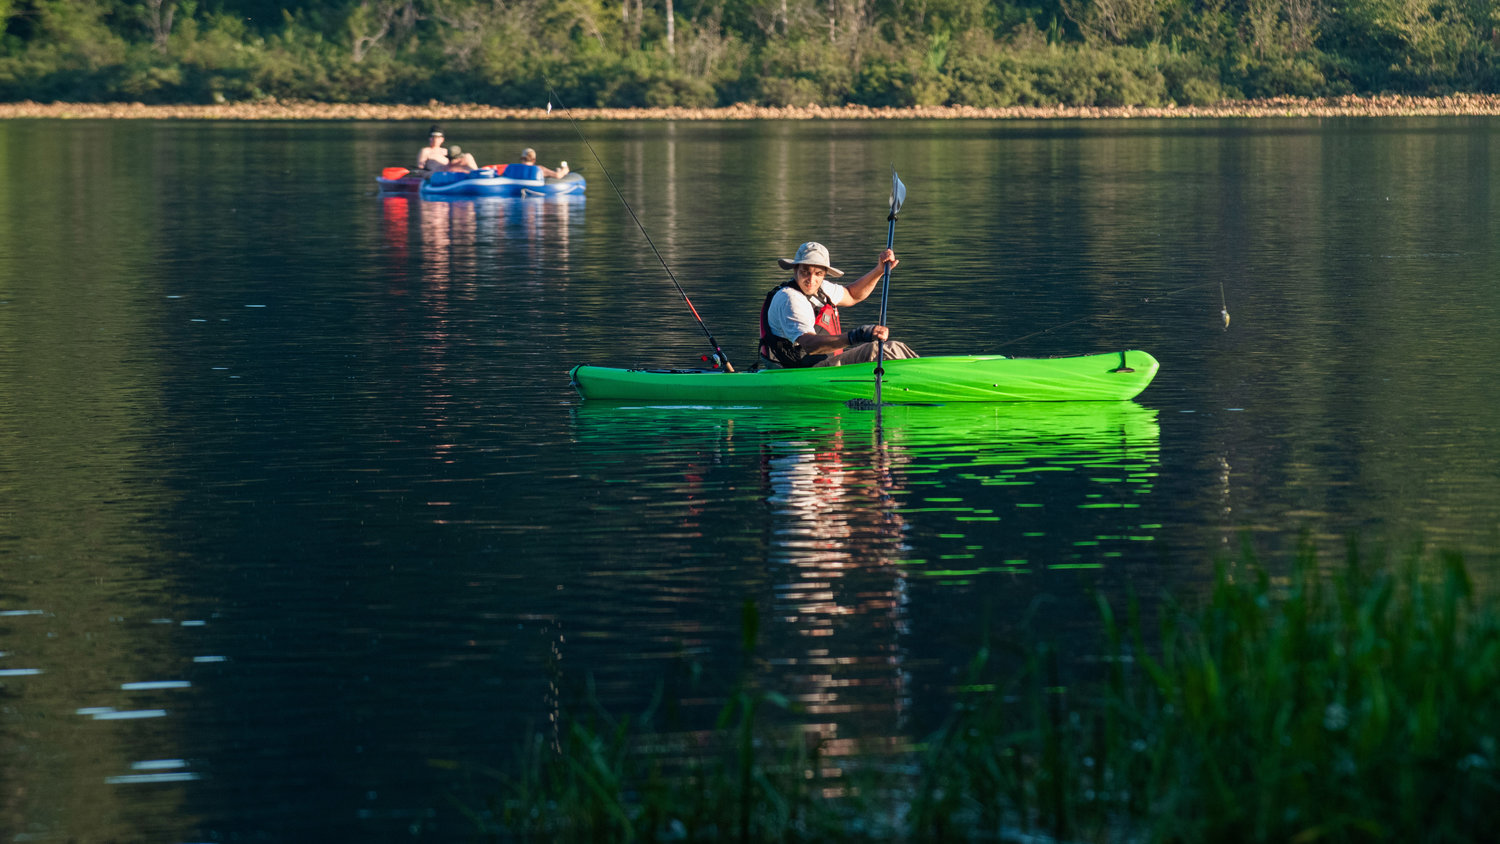 Fishing lures dangle as a kayaker paddles across Deep Lake at Millersylvania State Park.